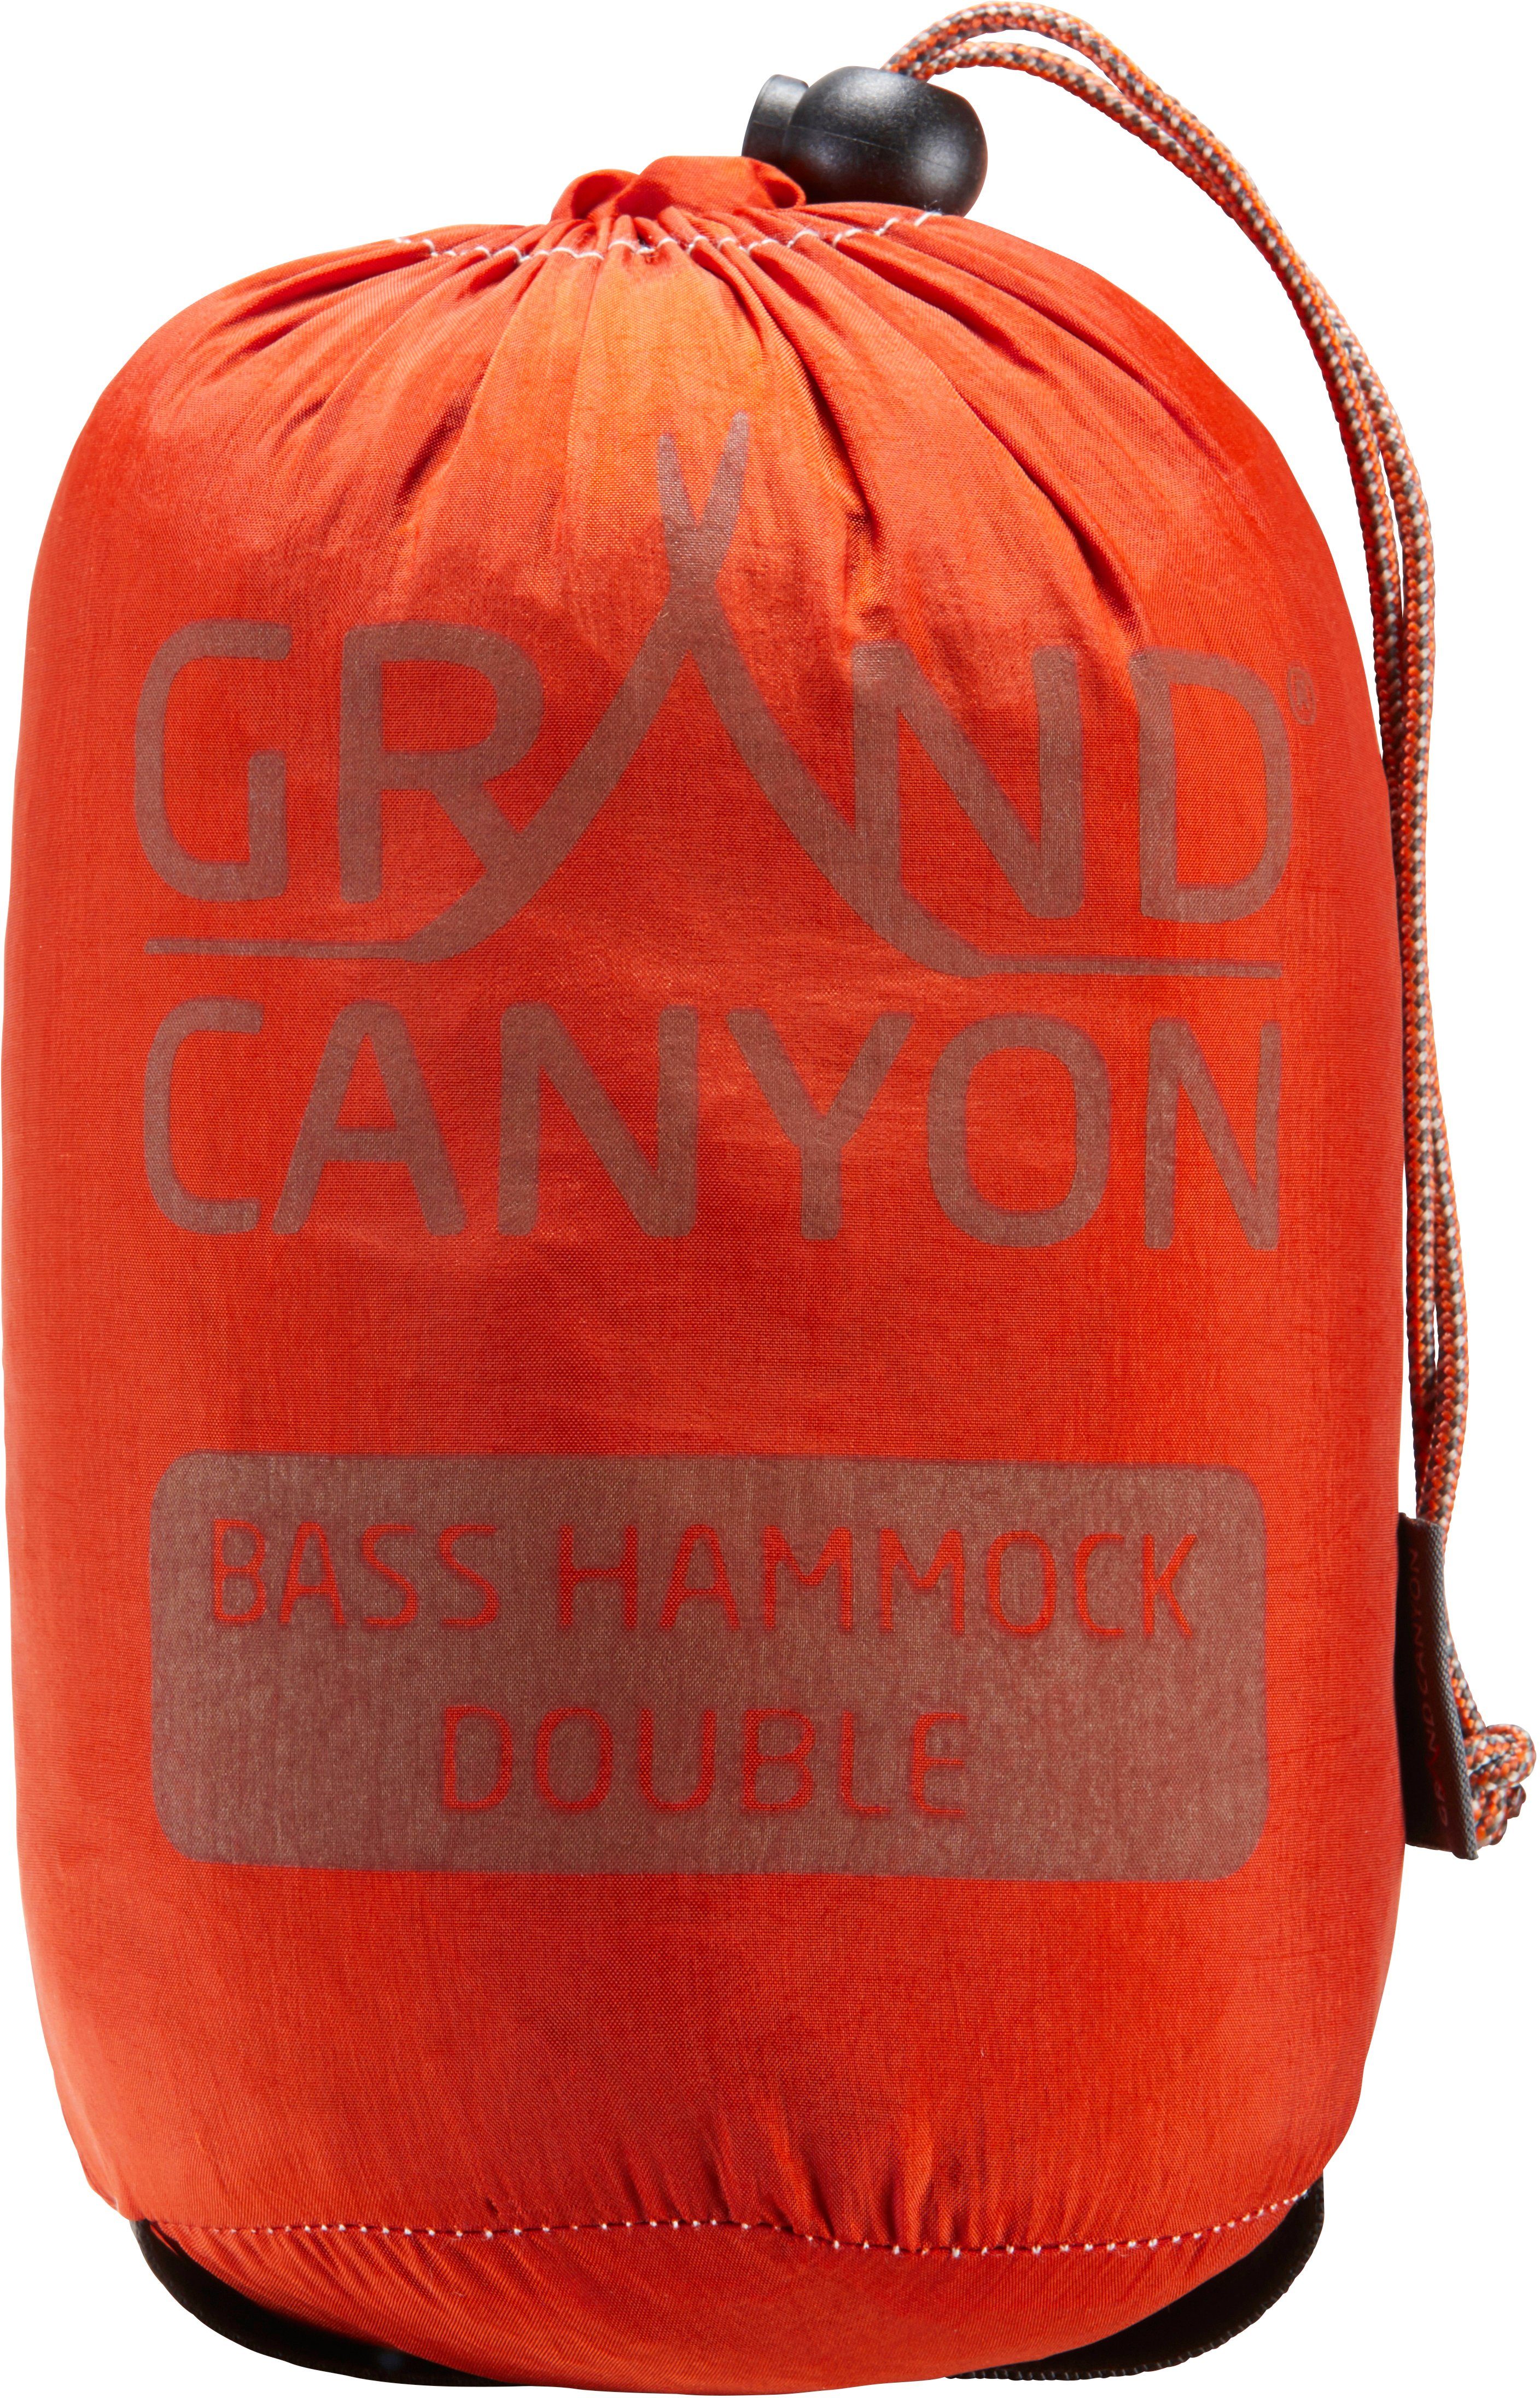 GRAND CANYON orange Hammock Hängematte Bass